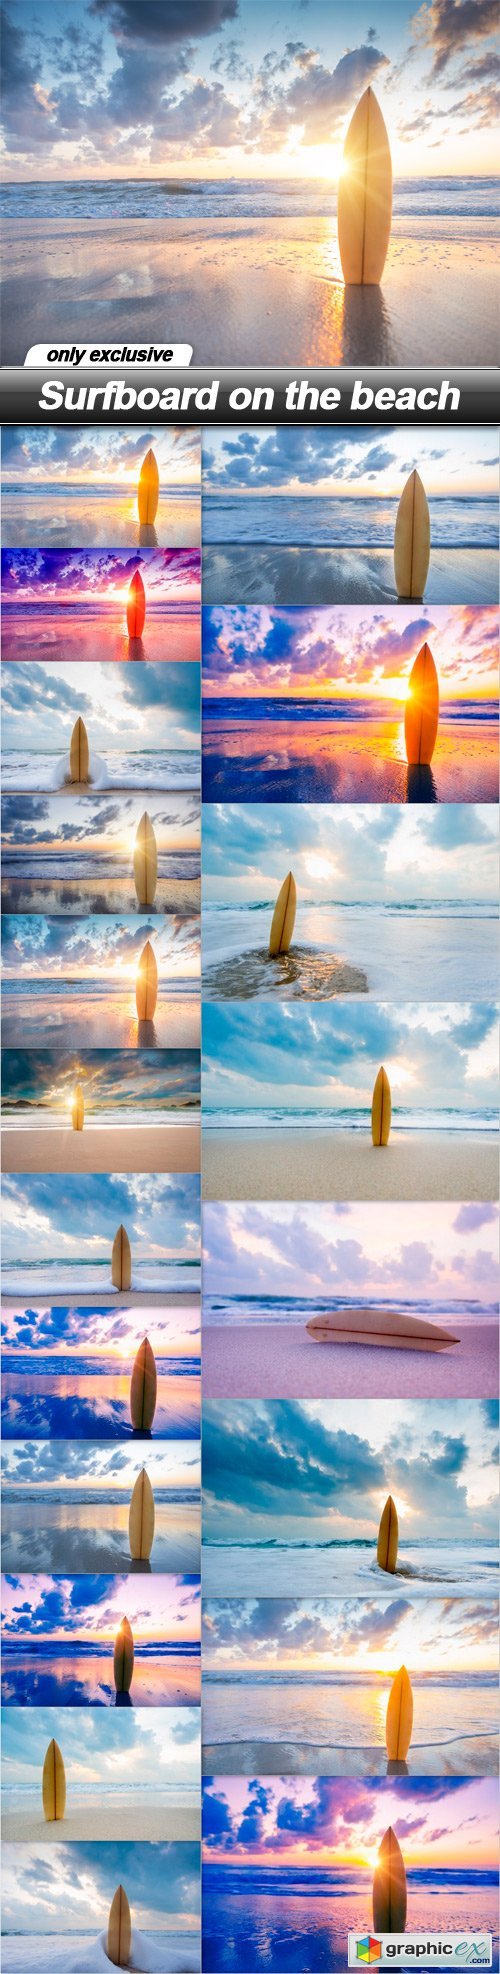 Surfboard on the beach - 20 UHQ JPEG